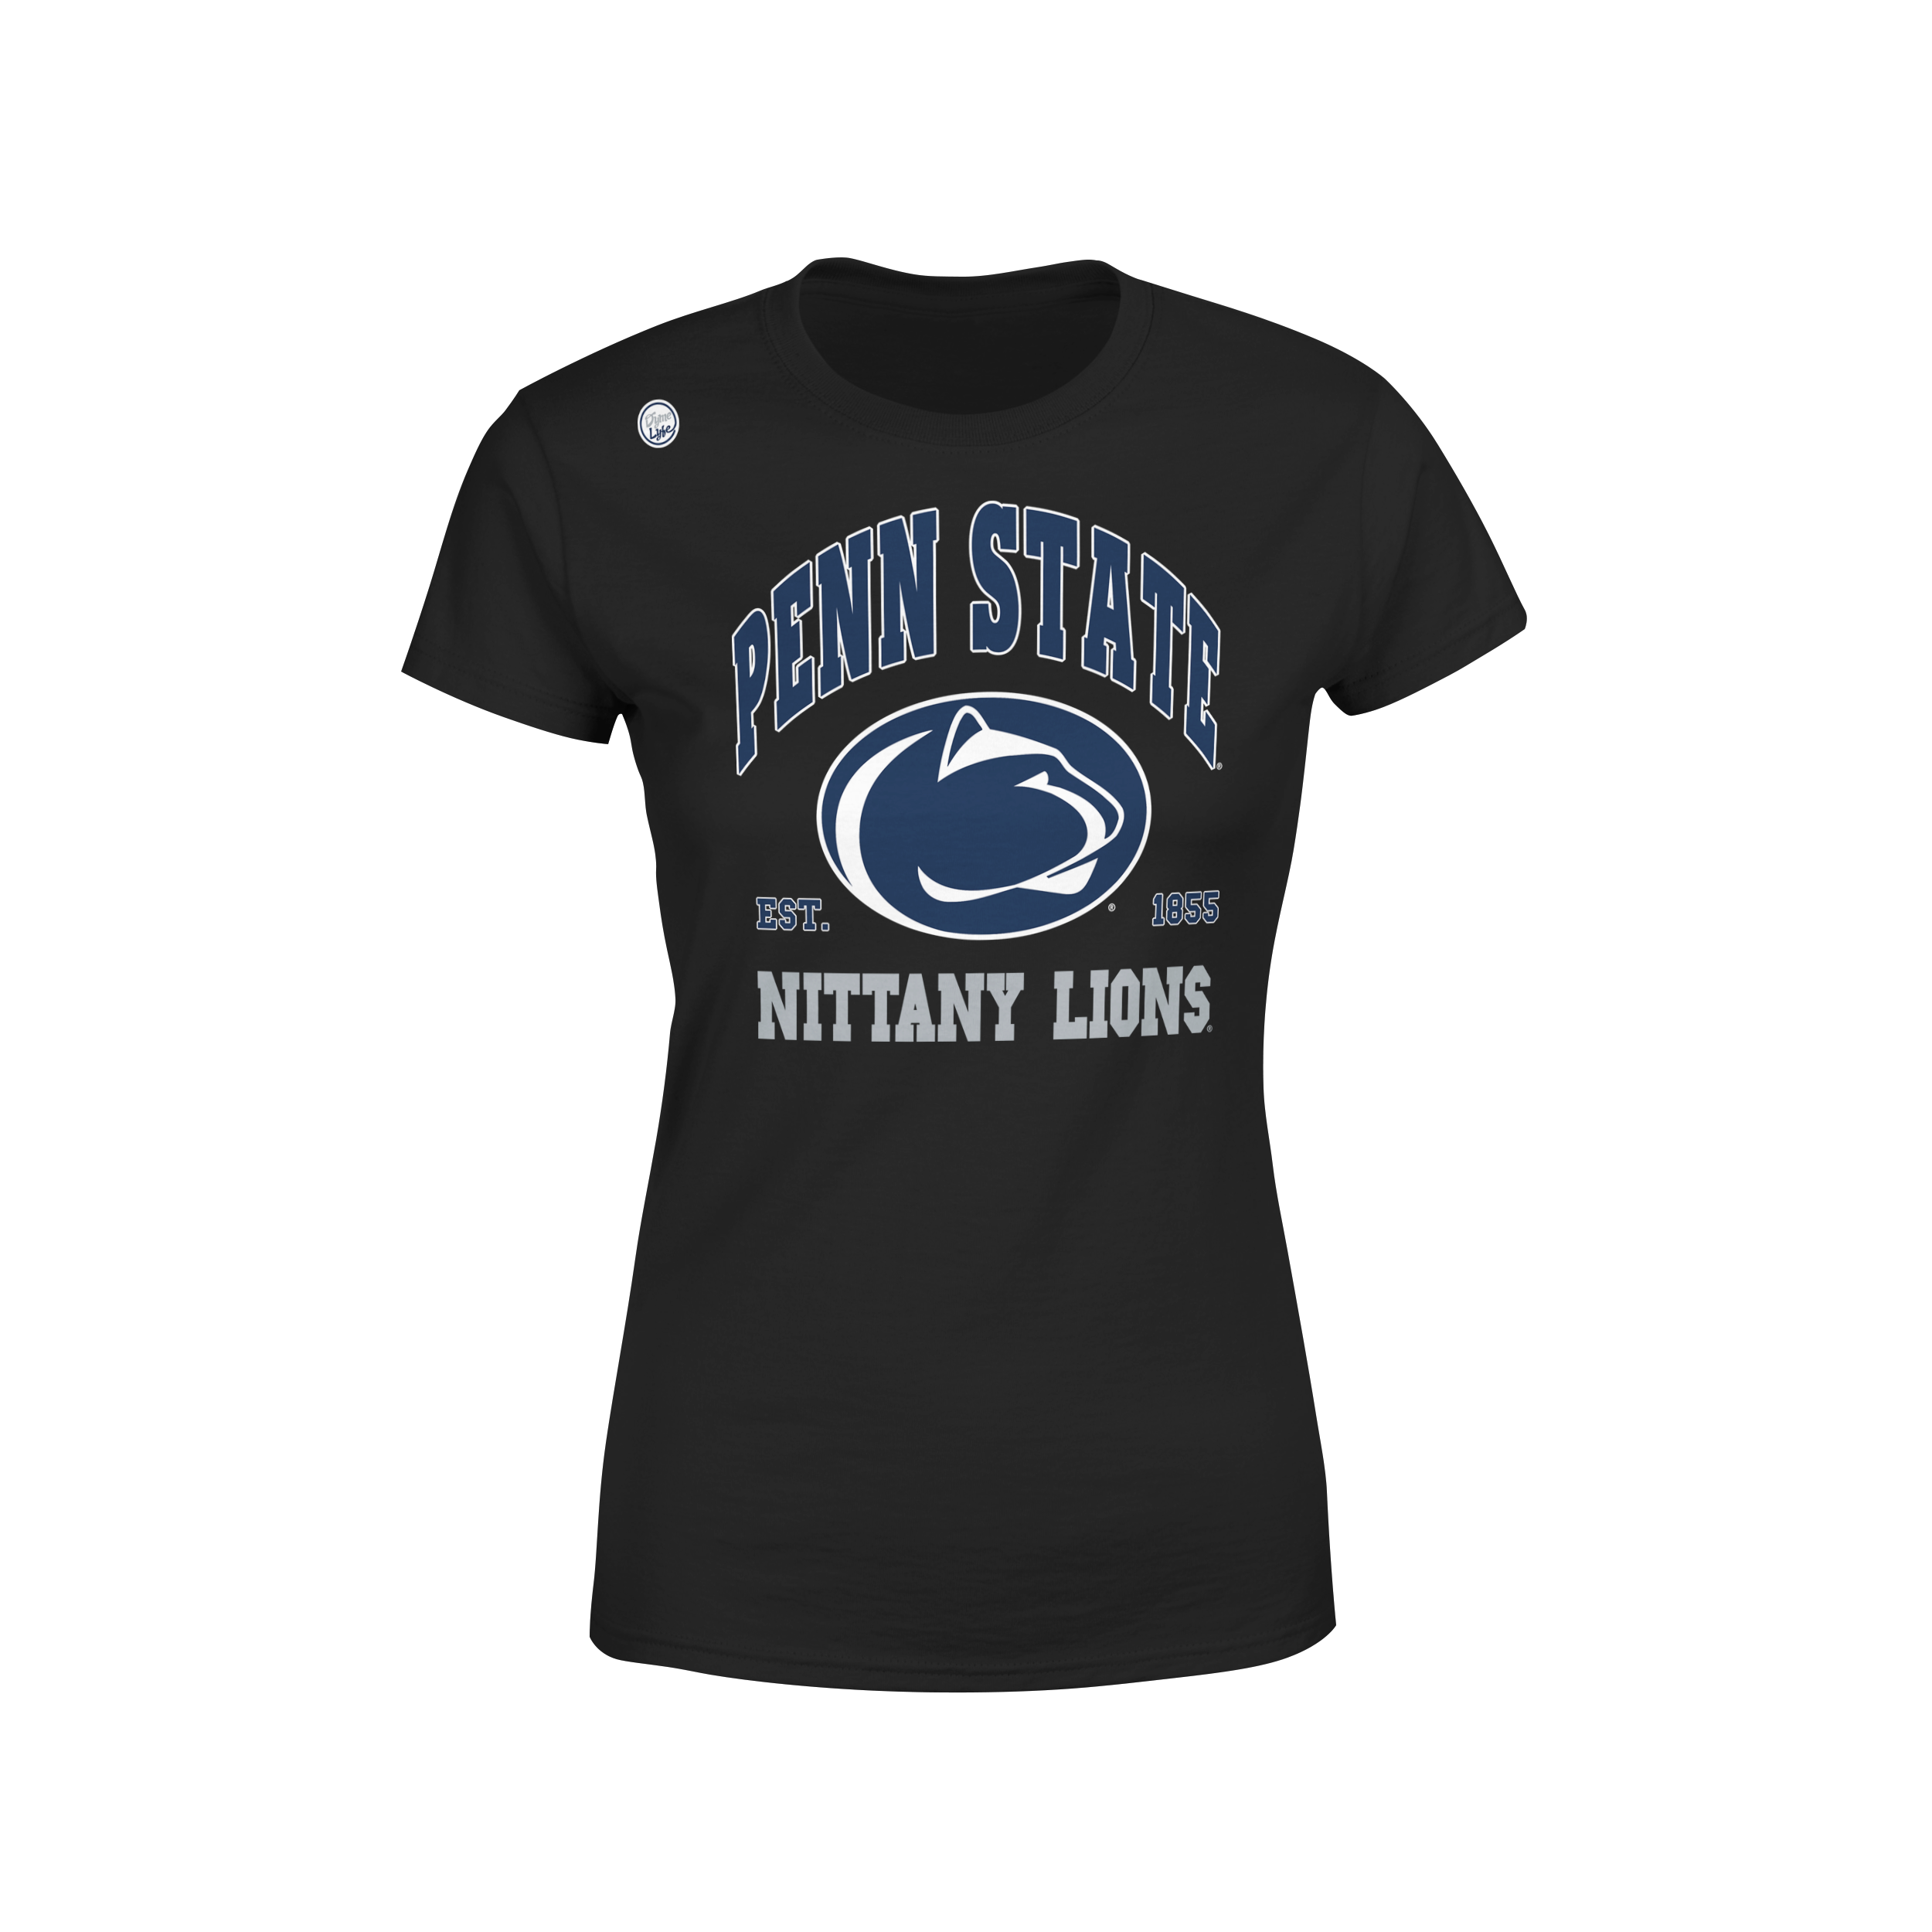 Penn State Nittany Lions Women’s Est. Tee